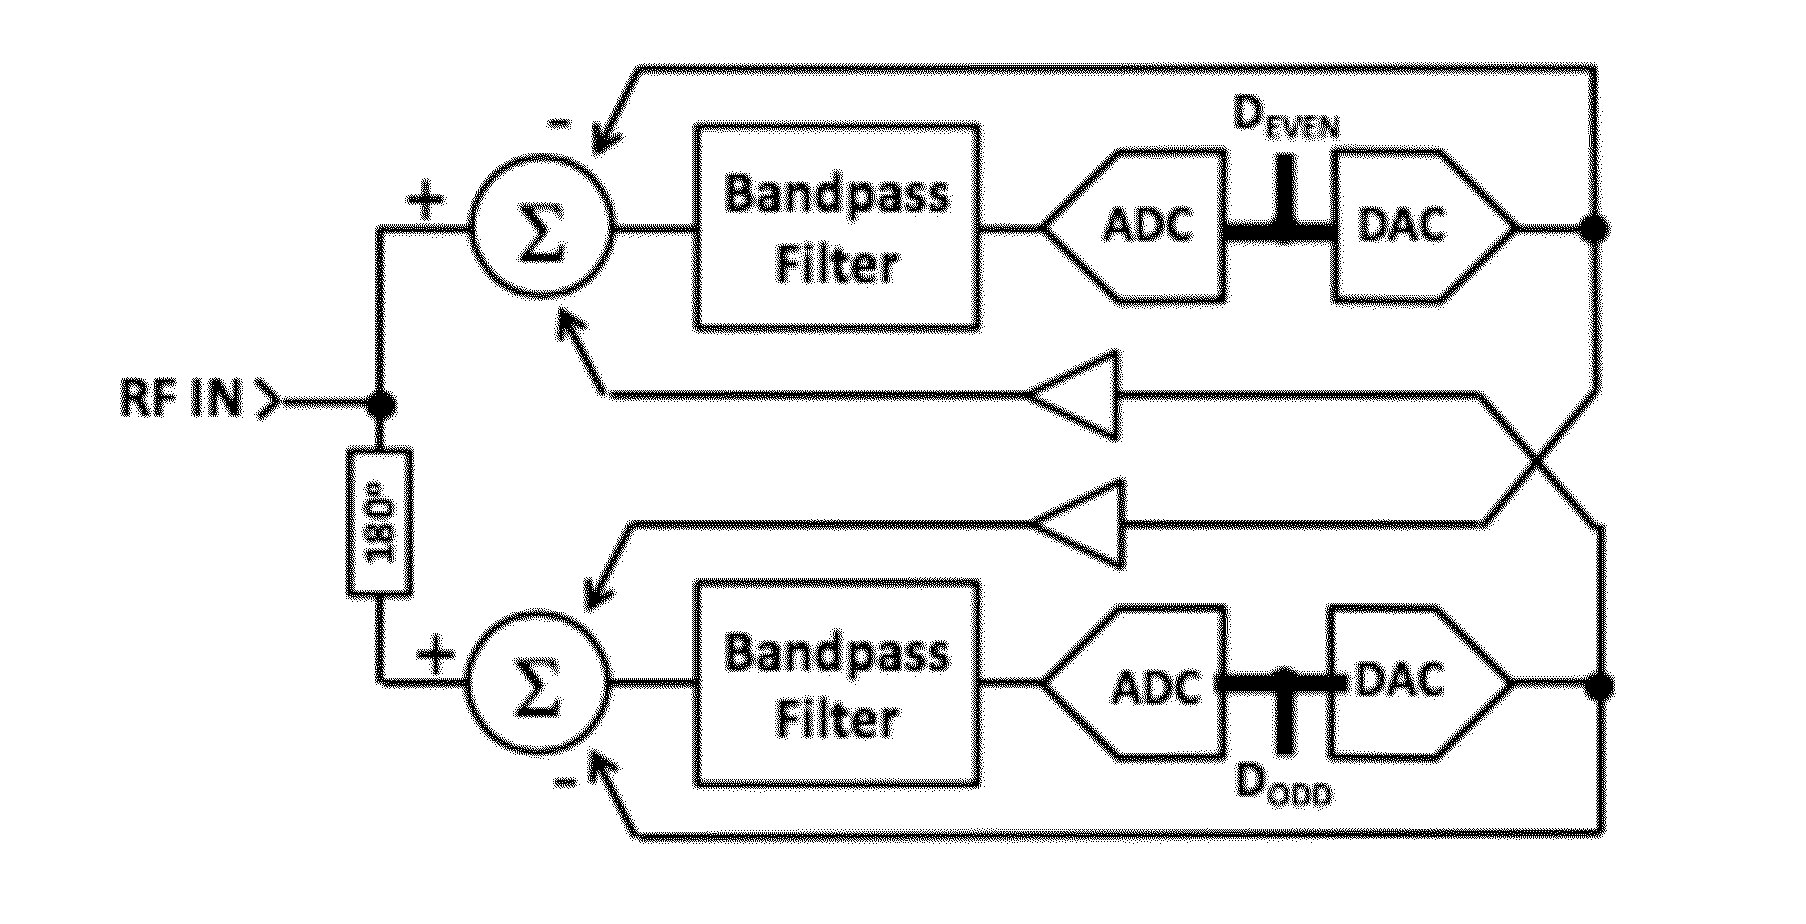 Interleaved Delta-Sigma Modulator